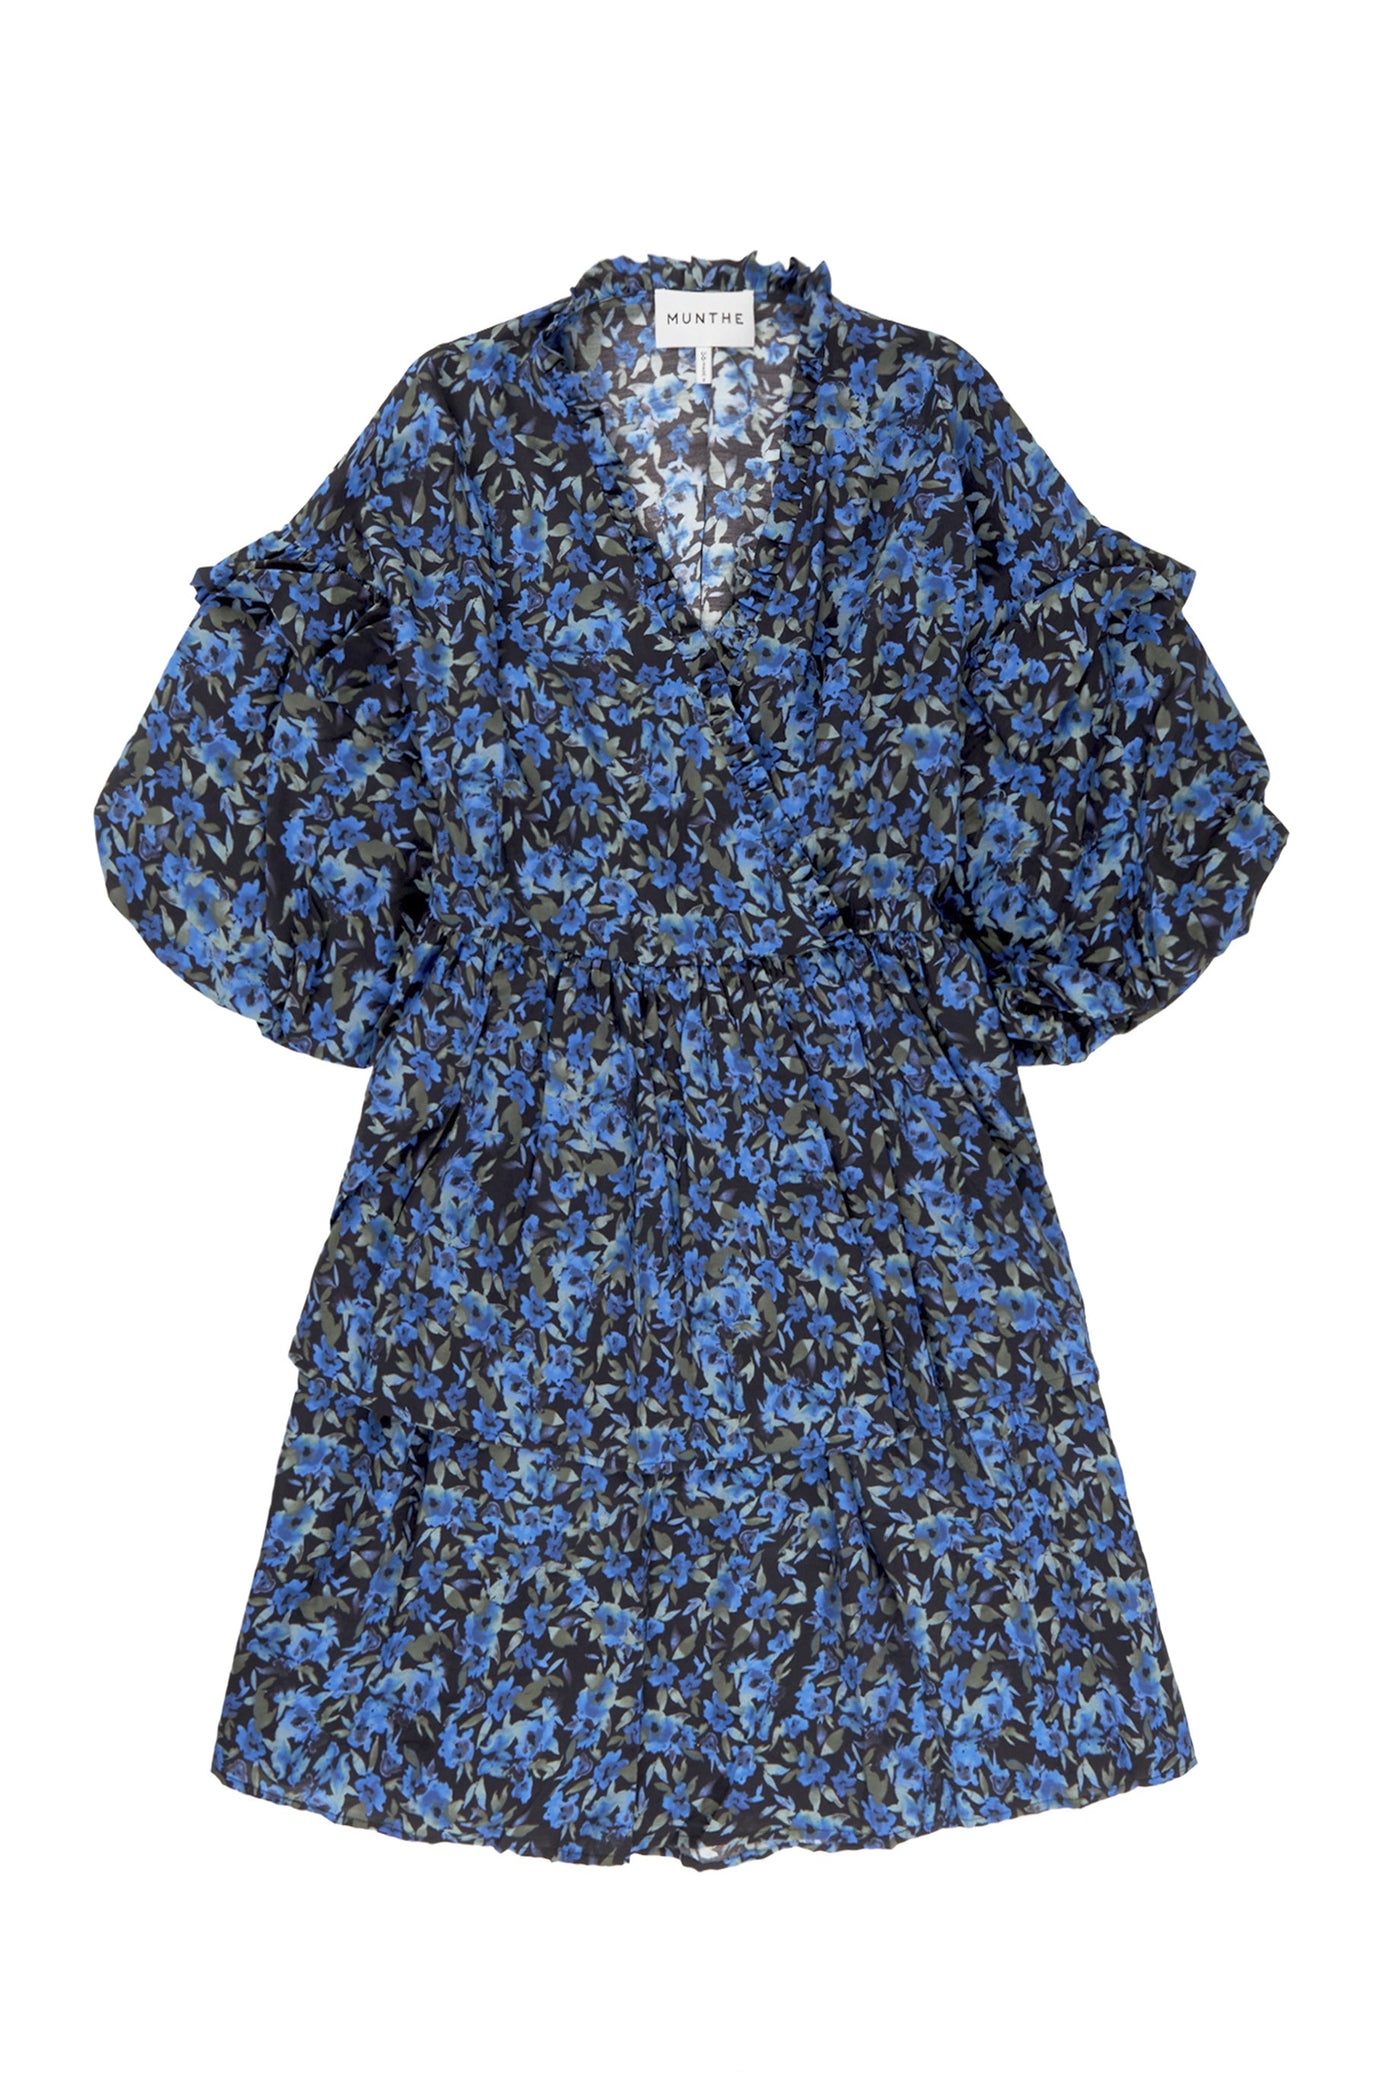 Munthe Anage Dress - Blue